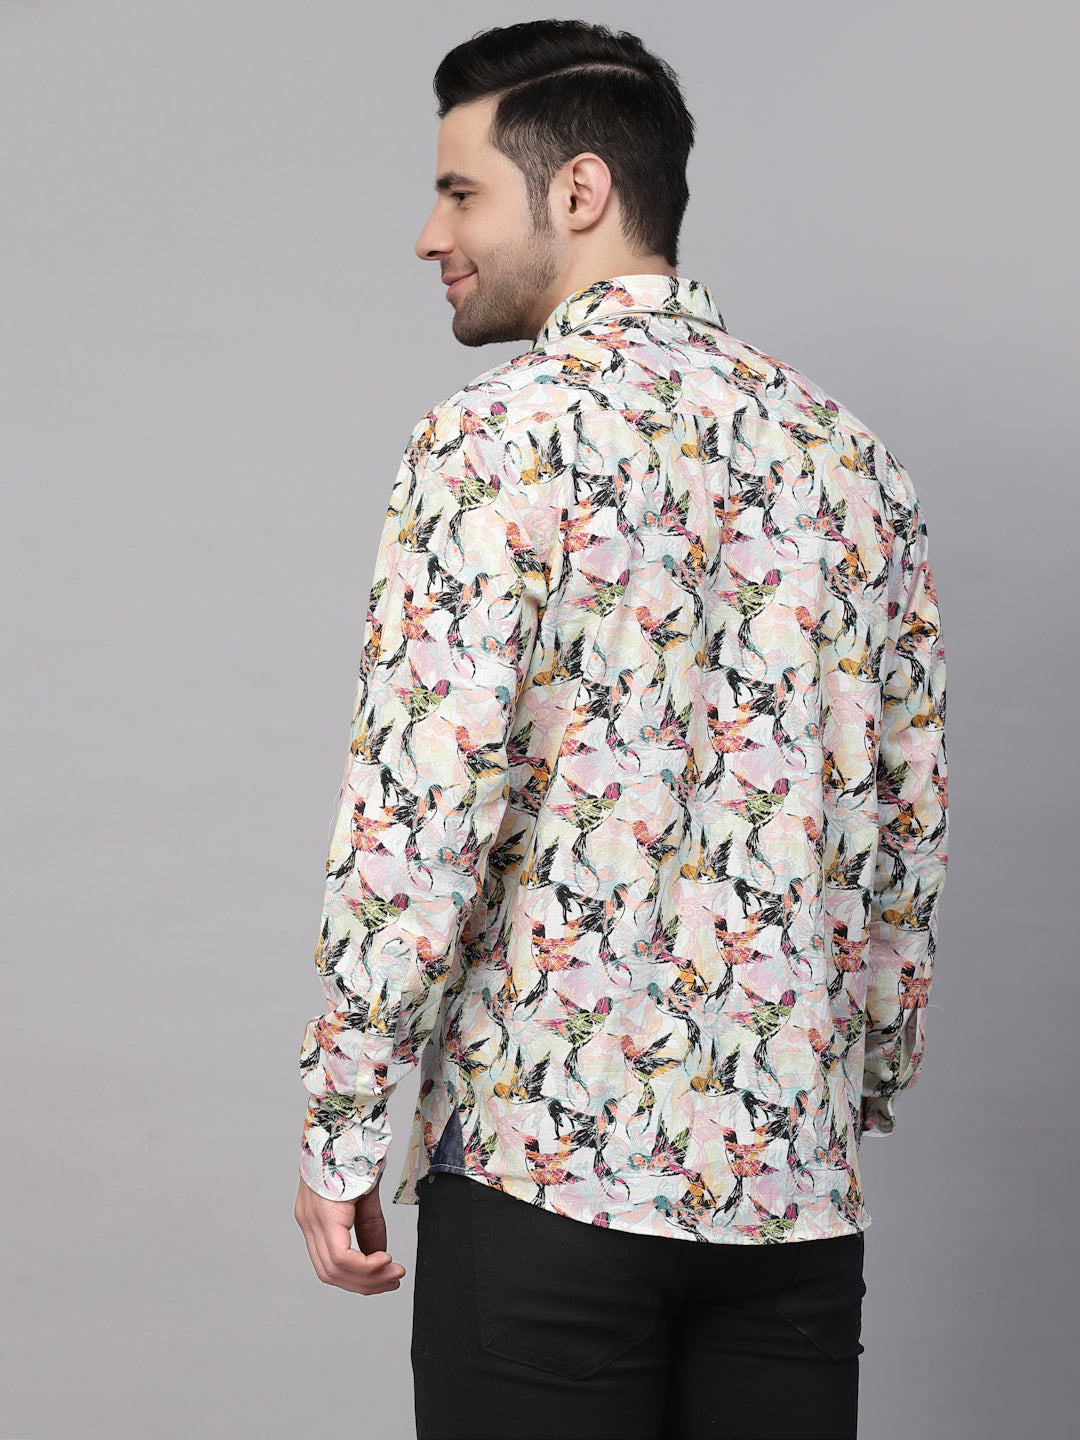 Valbone Men’s Digital Print Birds Printed Regular Fit Casual Shirt Full Sleeves